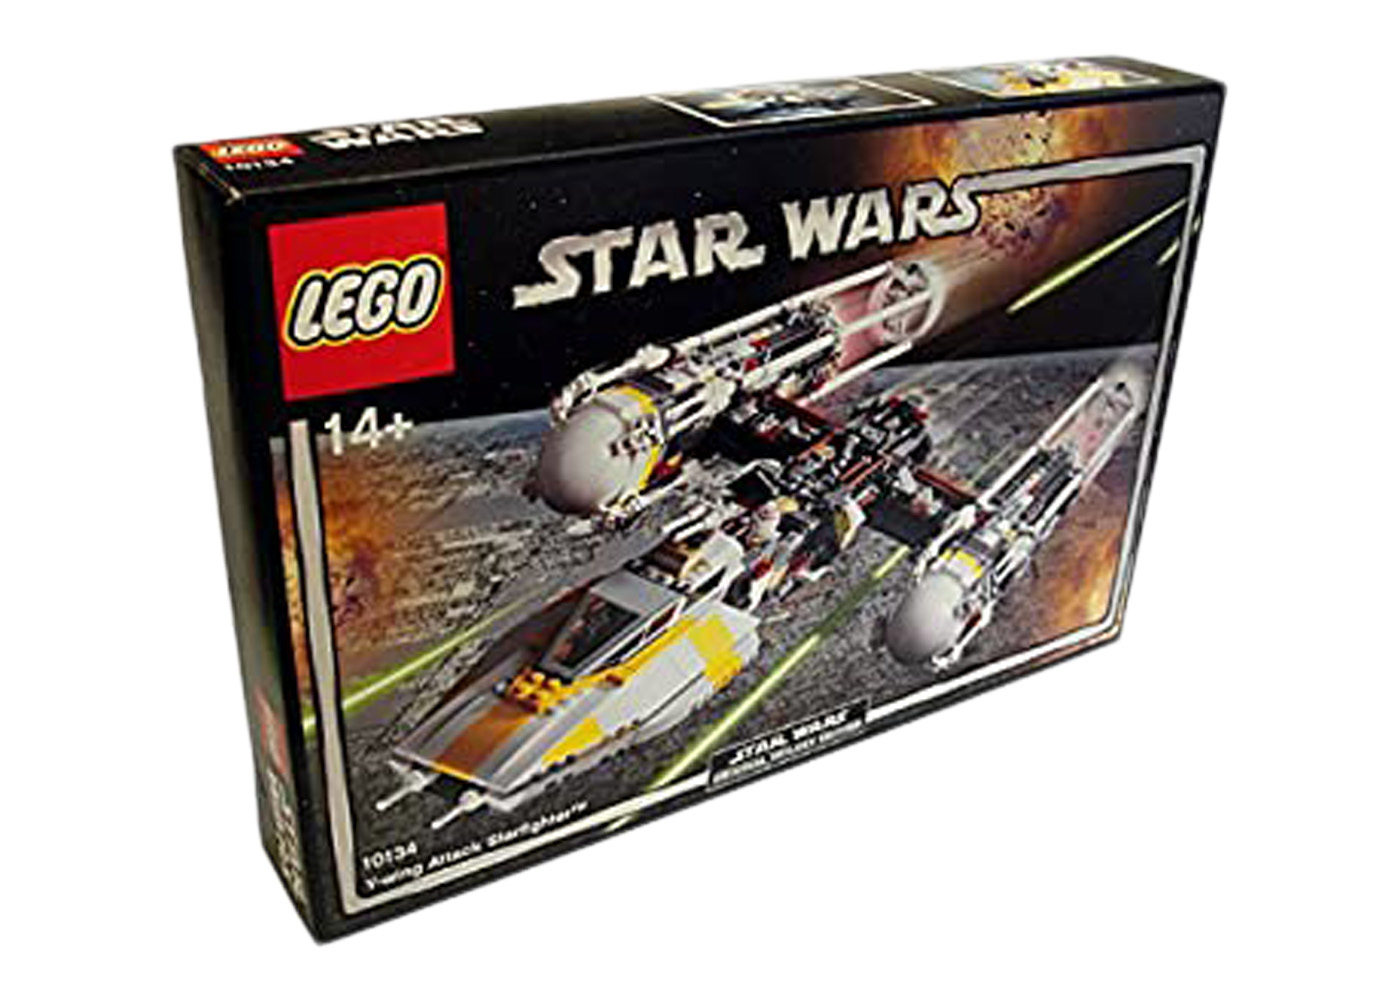 LEGO Star Wars Y-wing Attack Starfighter Set 10134 - US